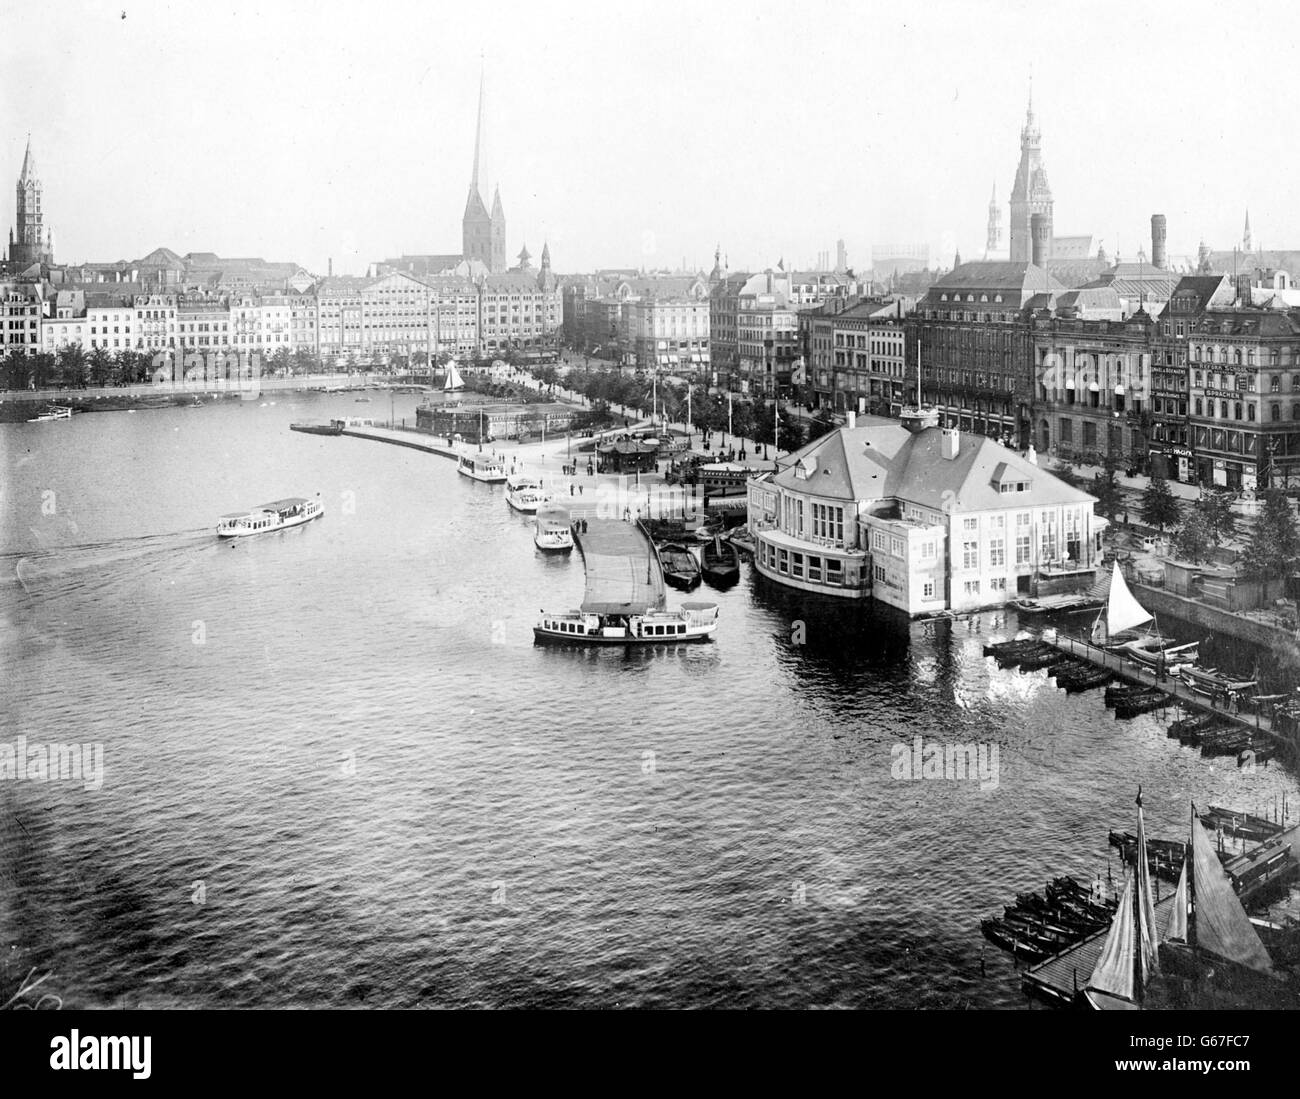 hamburg general view. A general view of Hamburg, Germany. Stock Photo